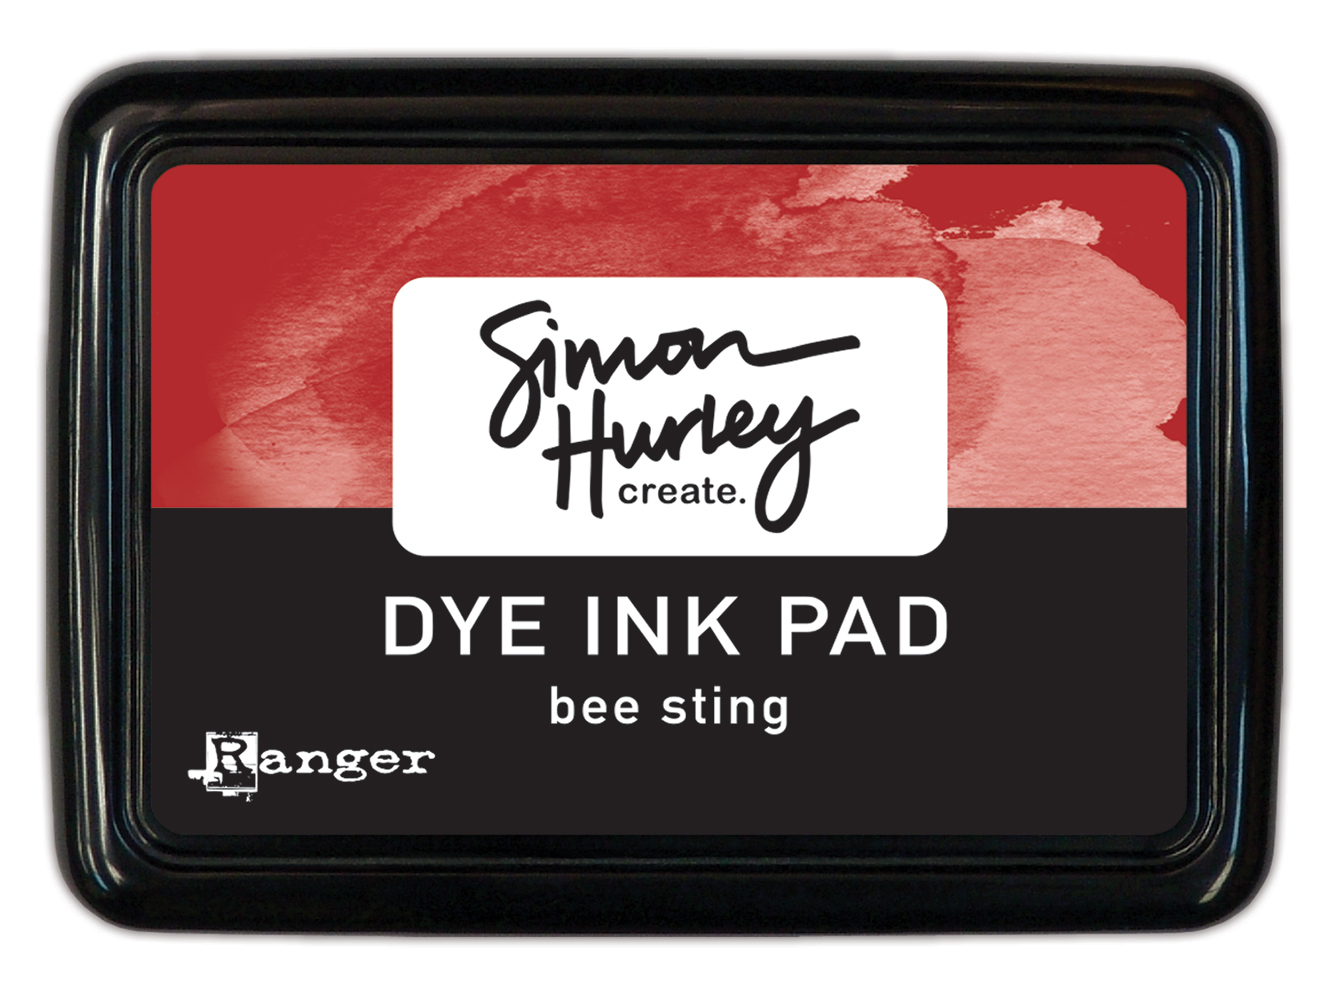 Ranger Simon Hurley Dye Ink Pad Bee Sting